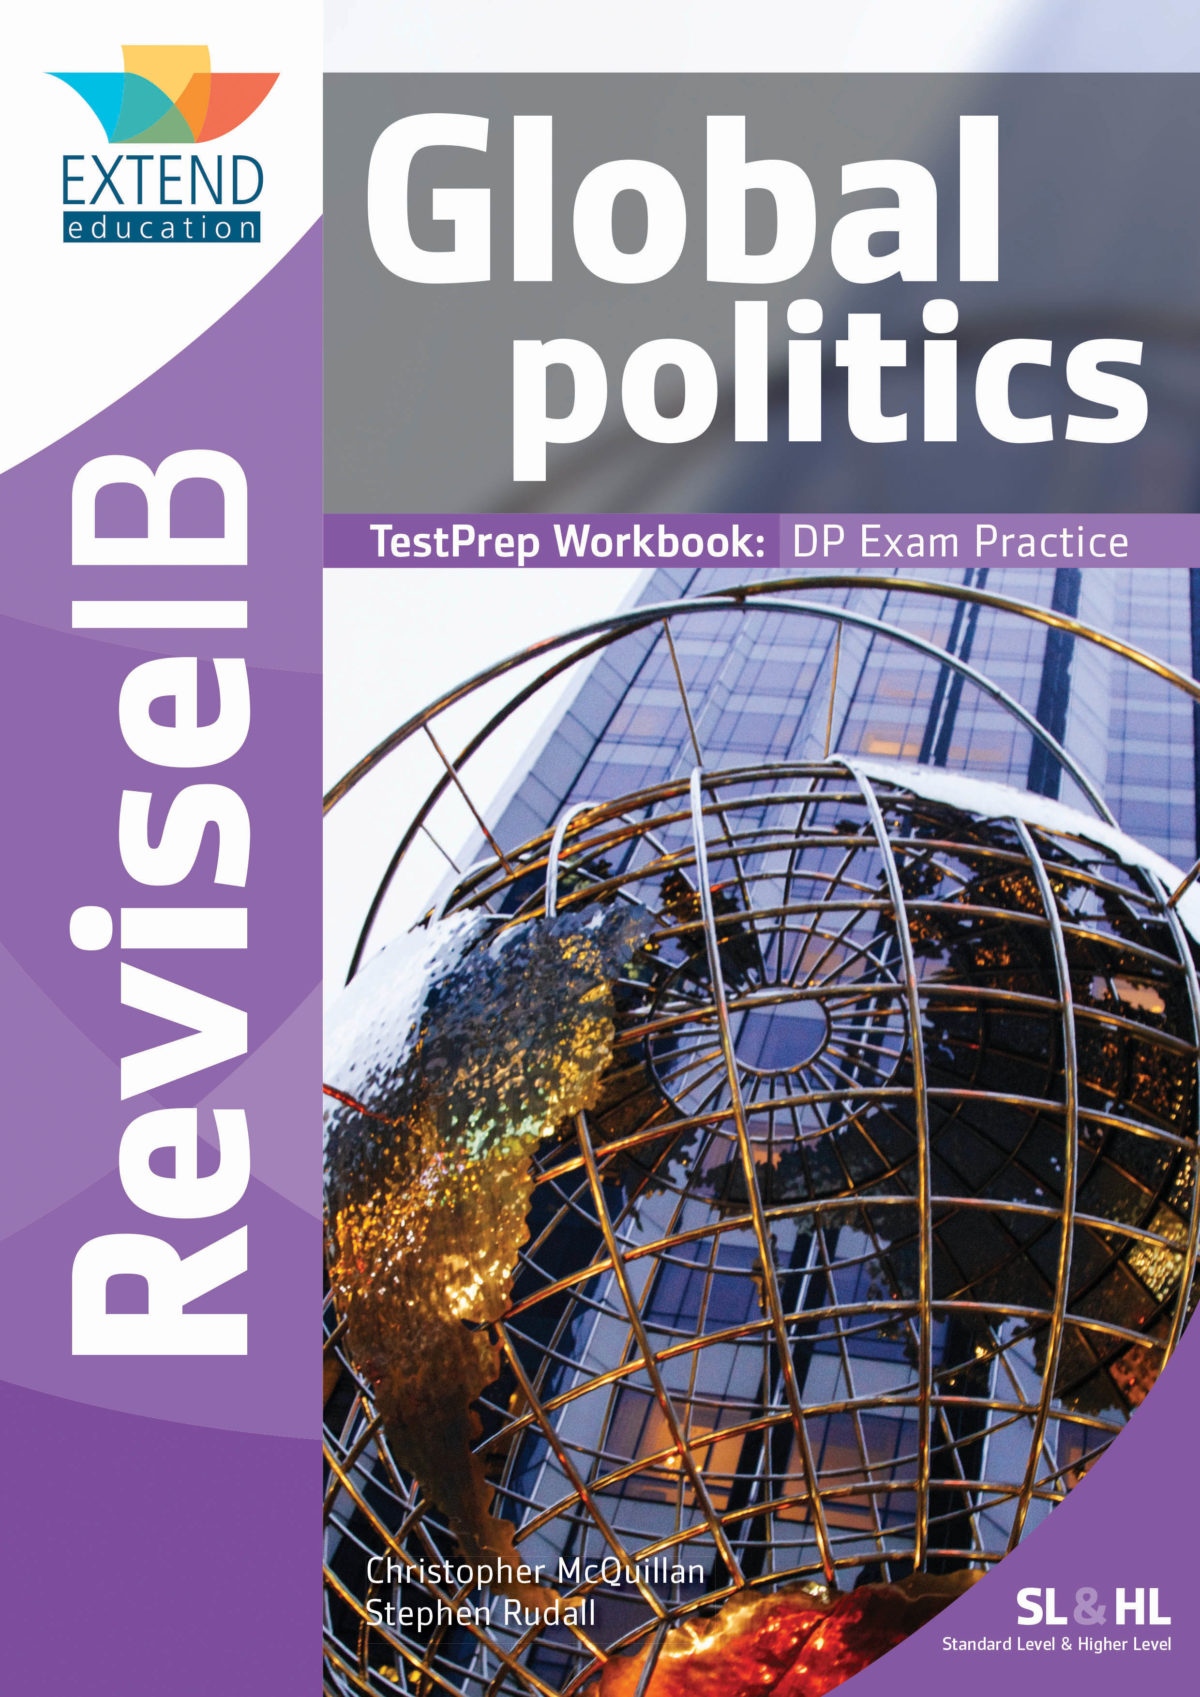 ib global politics oral presentation examples